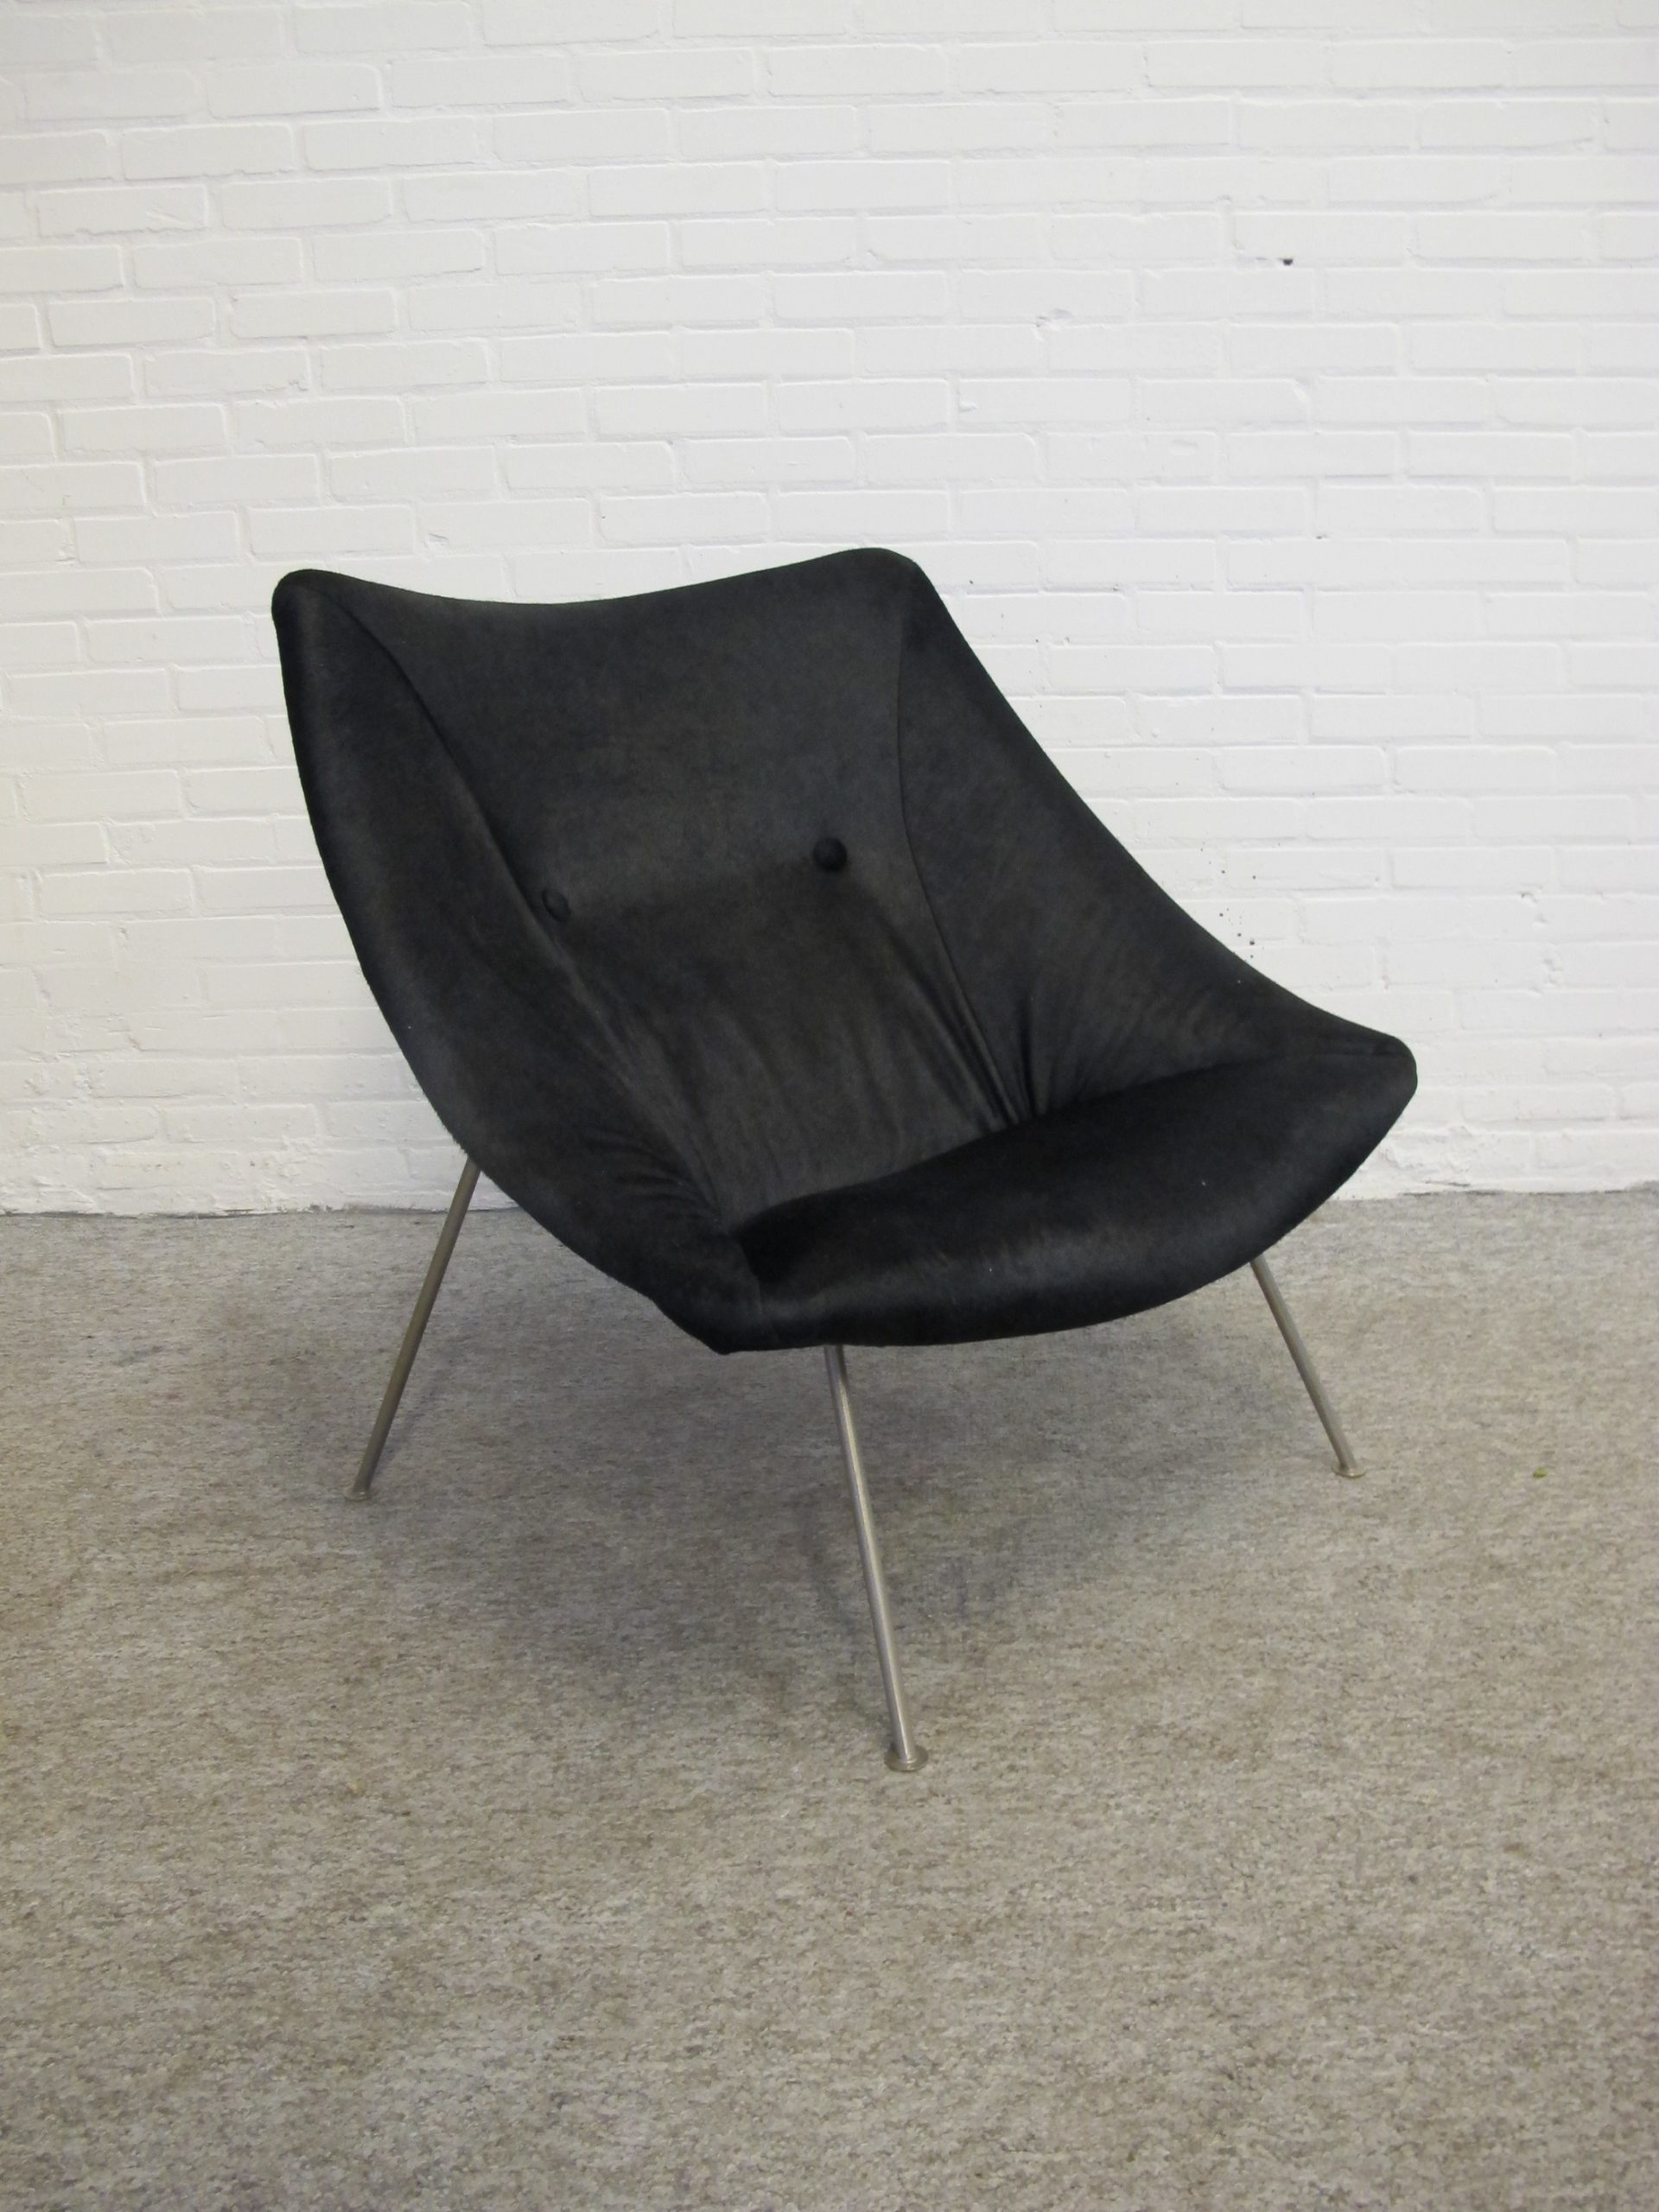 Oyster fauteuil lounge chair Pierre Paulin Artifort vintage midcentury